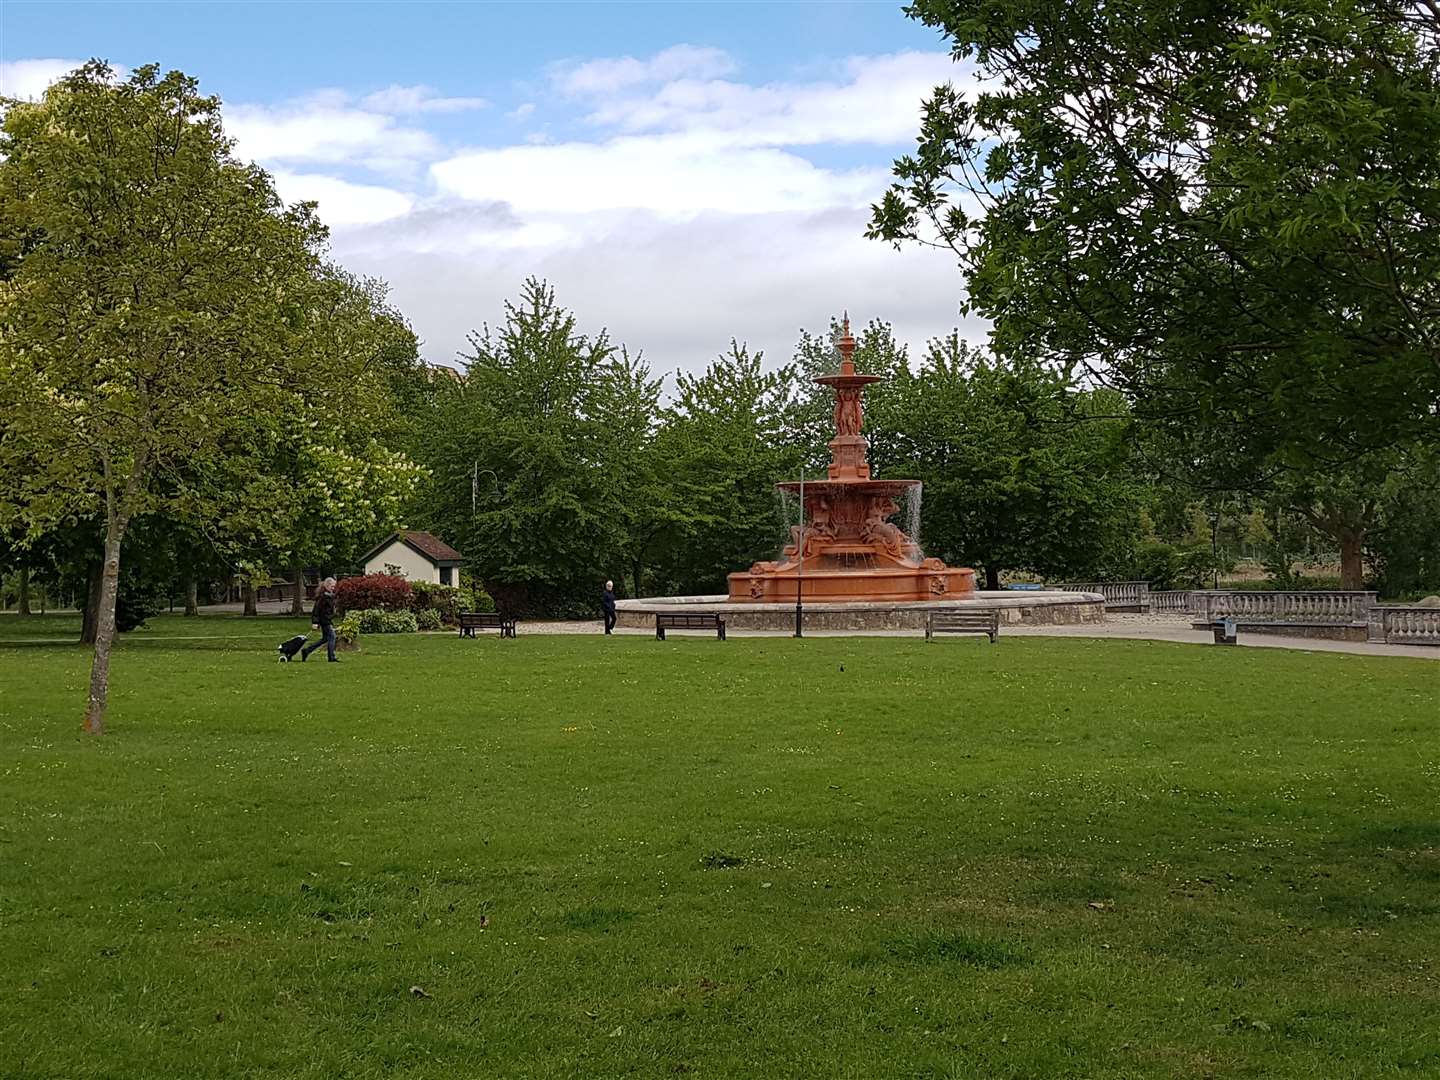 Victoria Park in Ashford